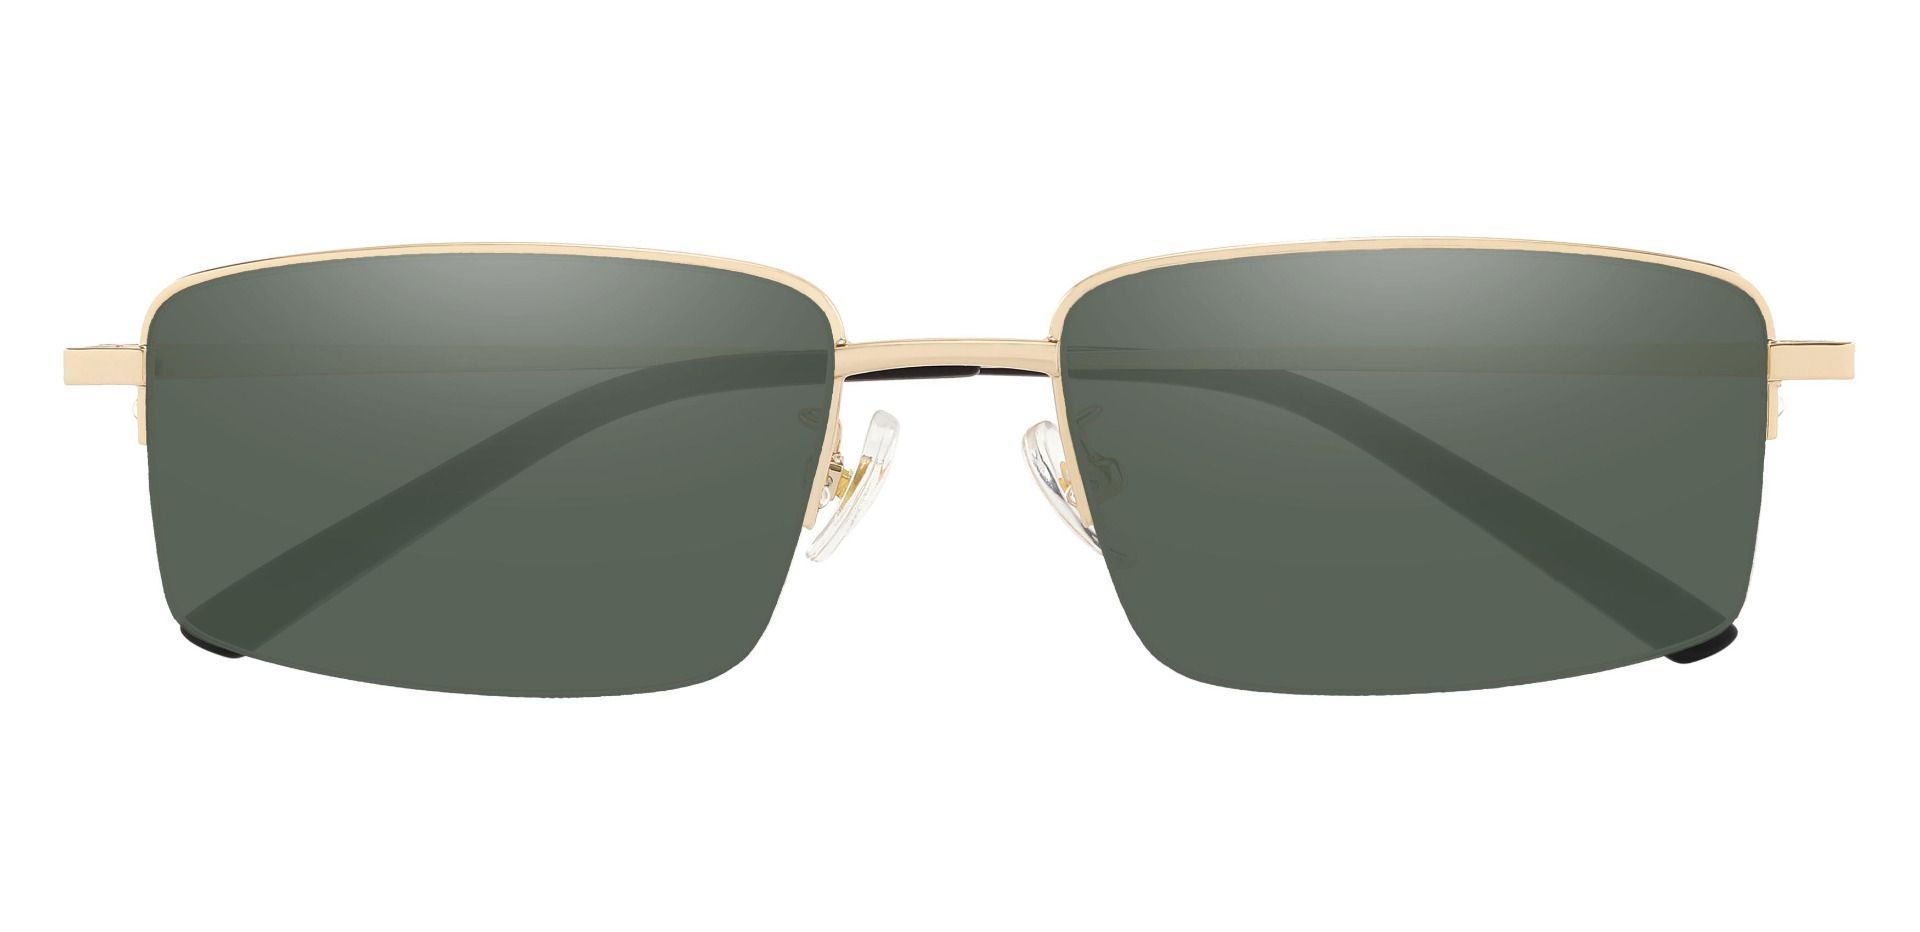 Wayne Rectangle Progressive Sunglasses - Gold Frame With Green Lenses